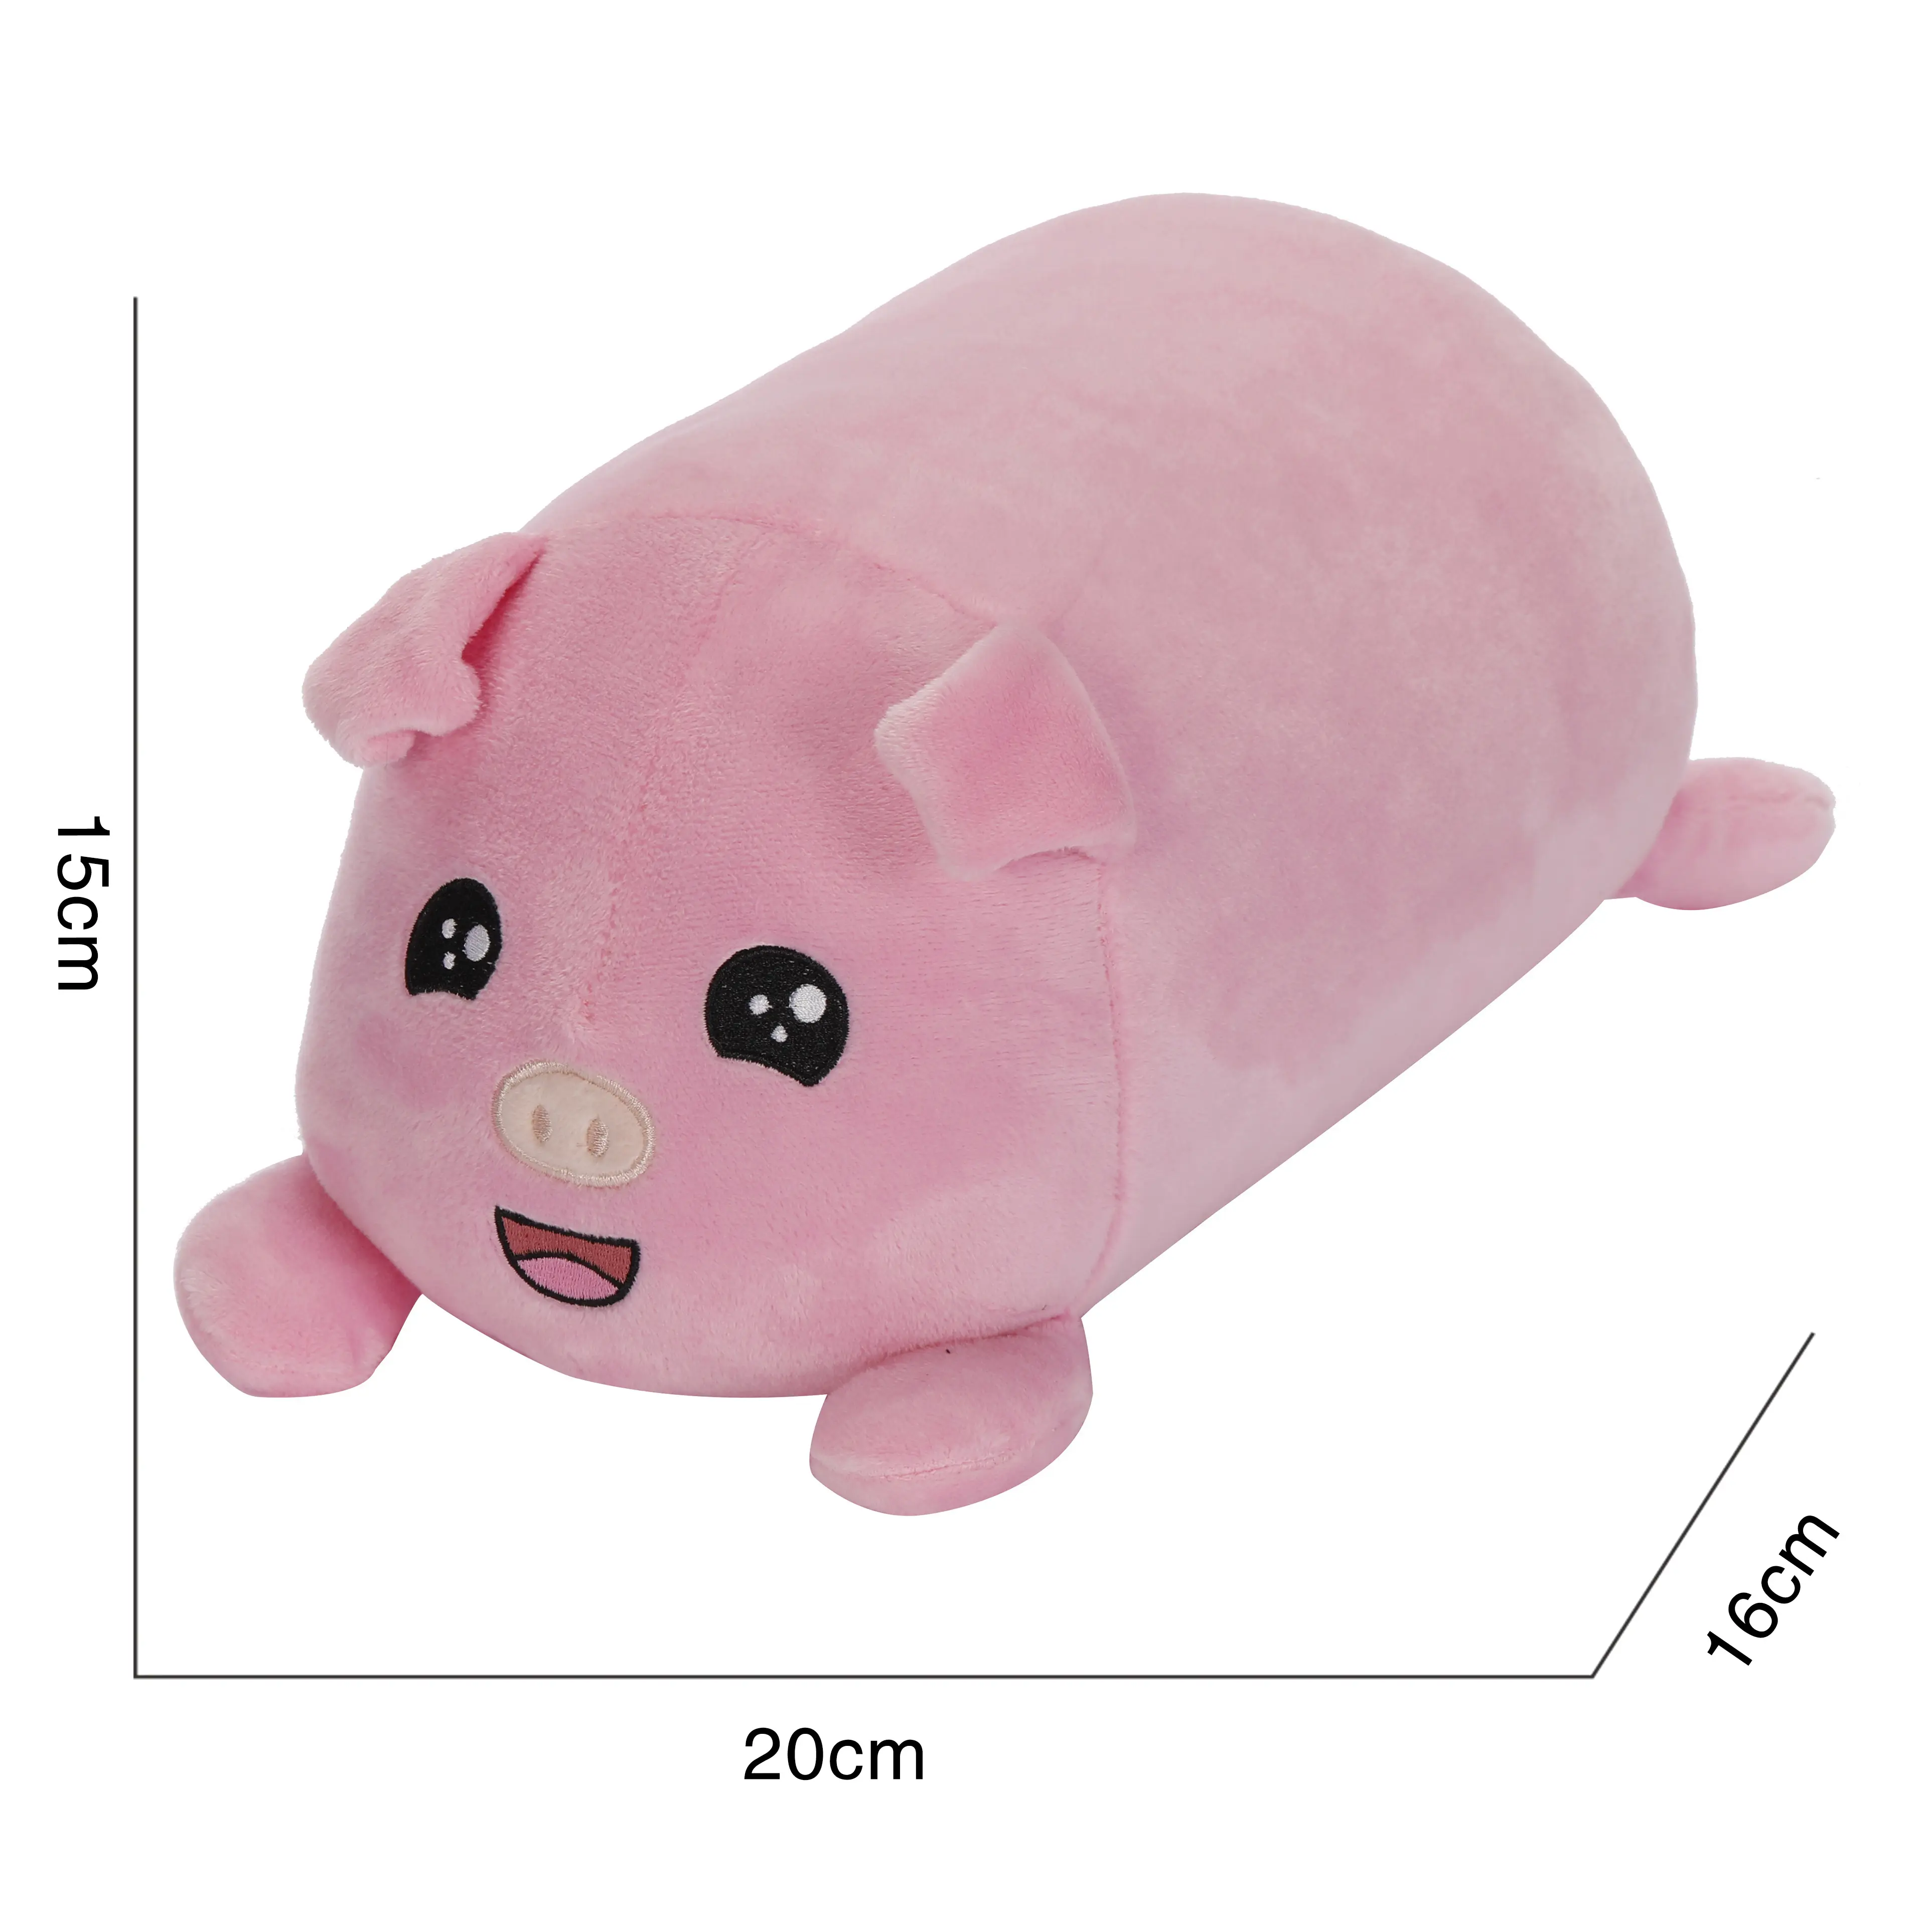 Almohada de tubo largo con forma de cerdo de dibujos animados Rosa almohada de animal de felpa